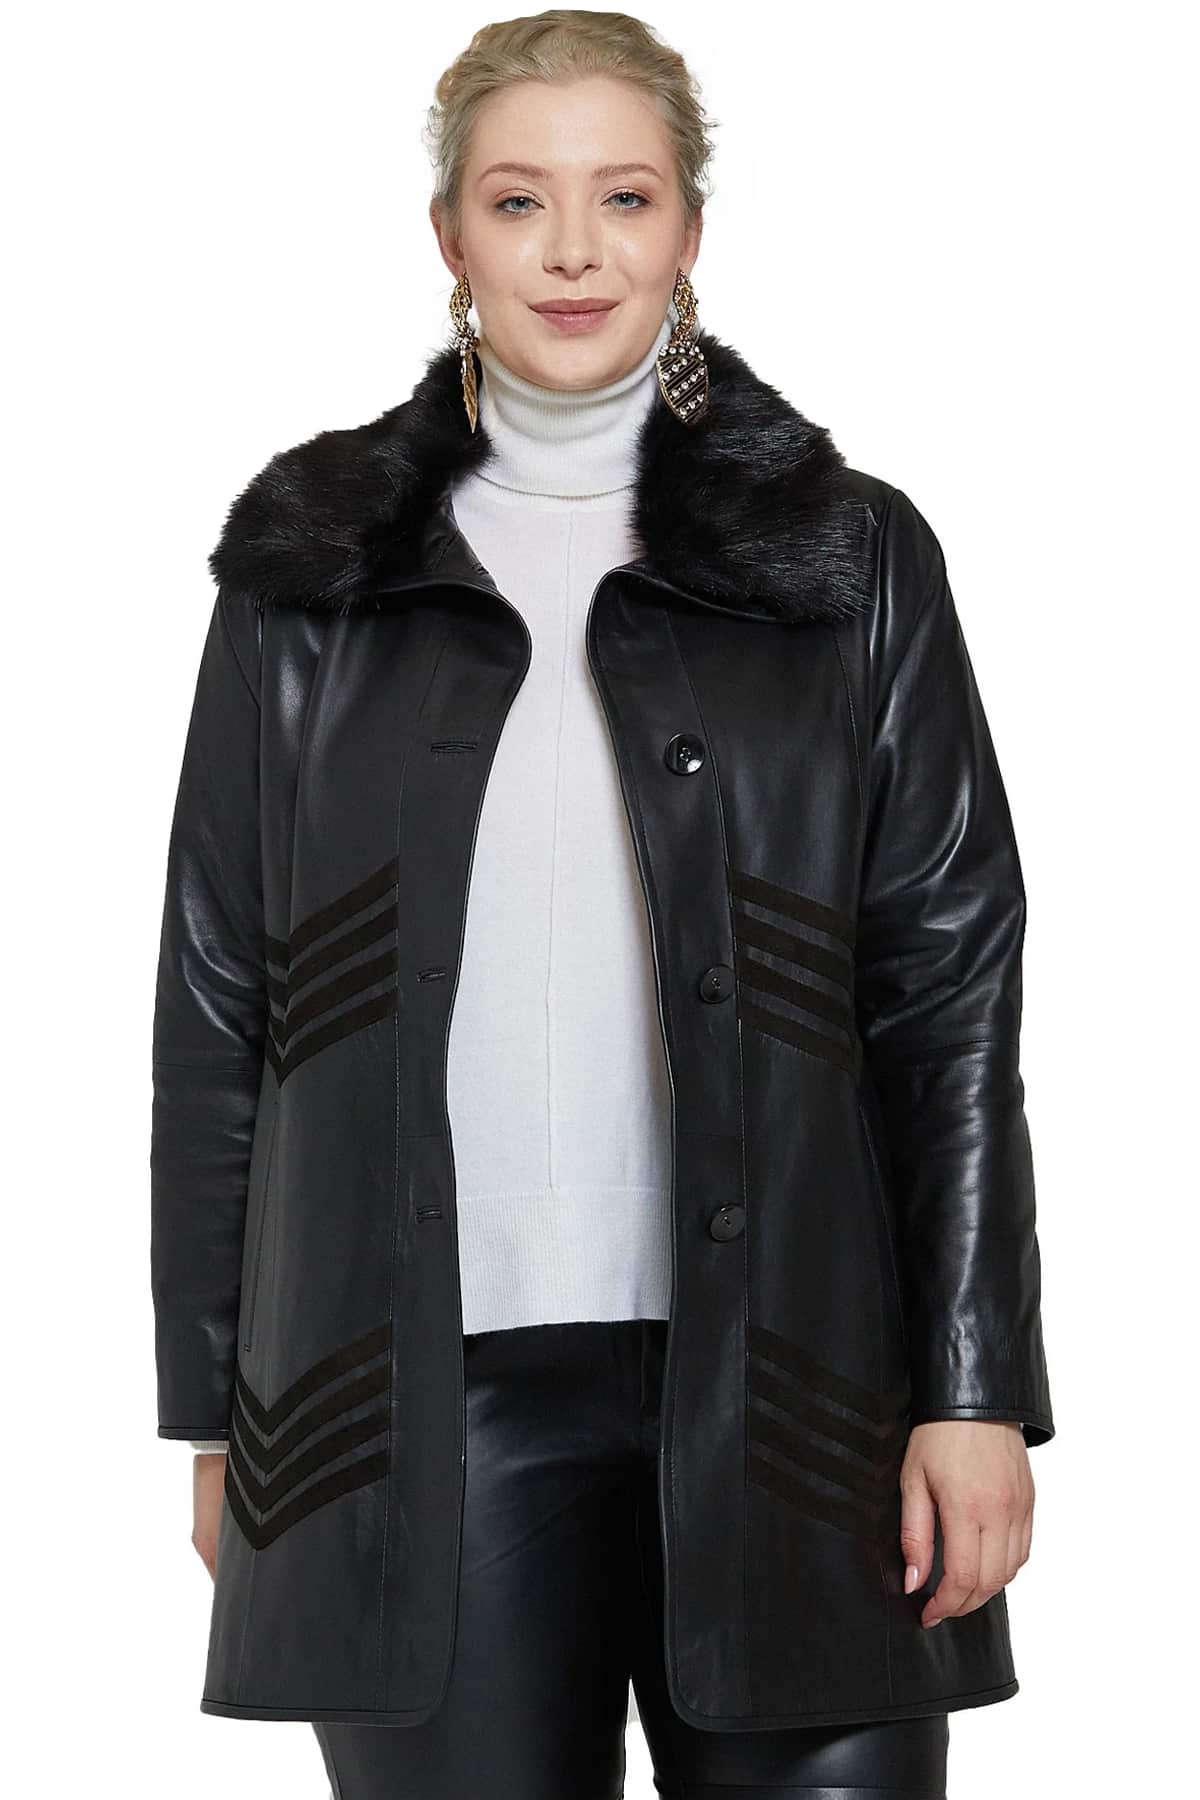 Stephanie Women's 100% Real Black Leather Beautiful Baggy Fur Collar Jacket